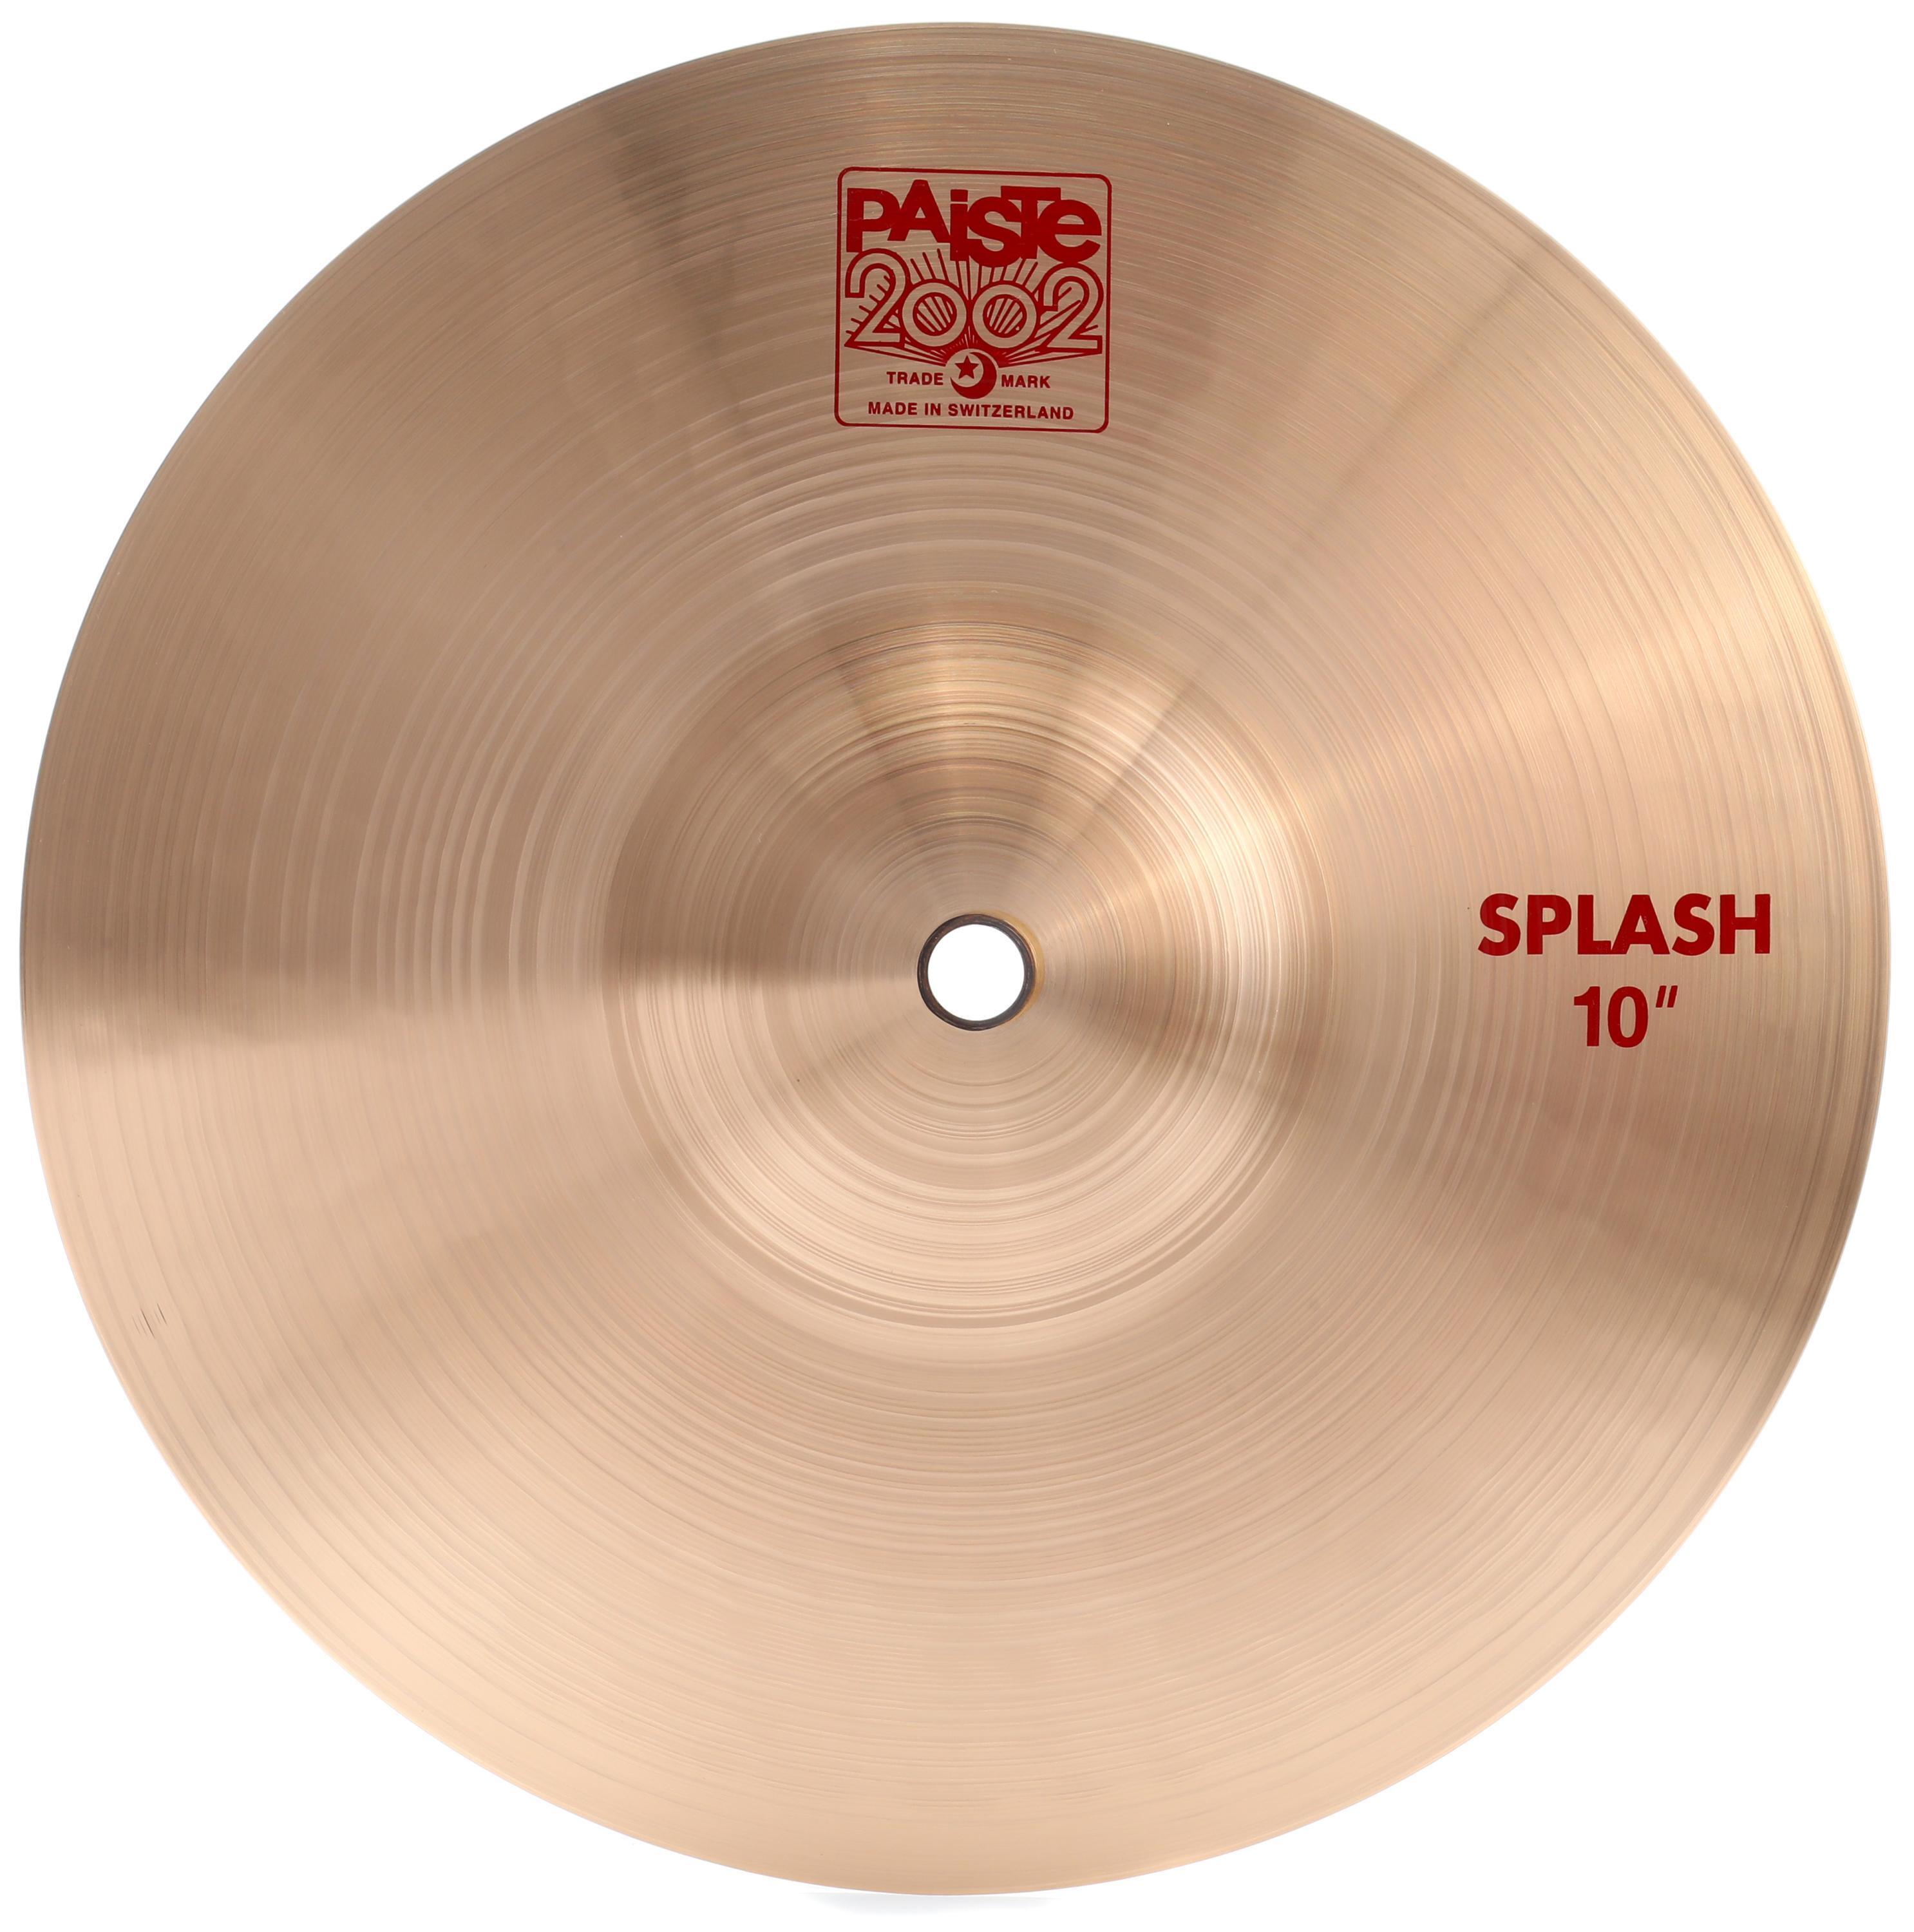 Paiste 10 inch 2002 Splash Cymbal | Sweetwater